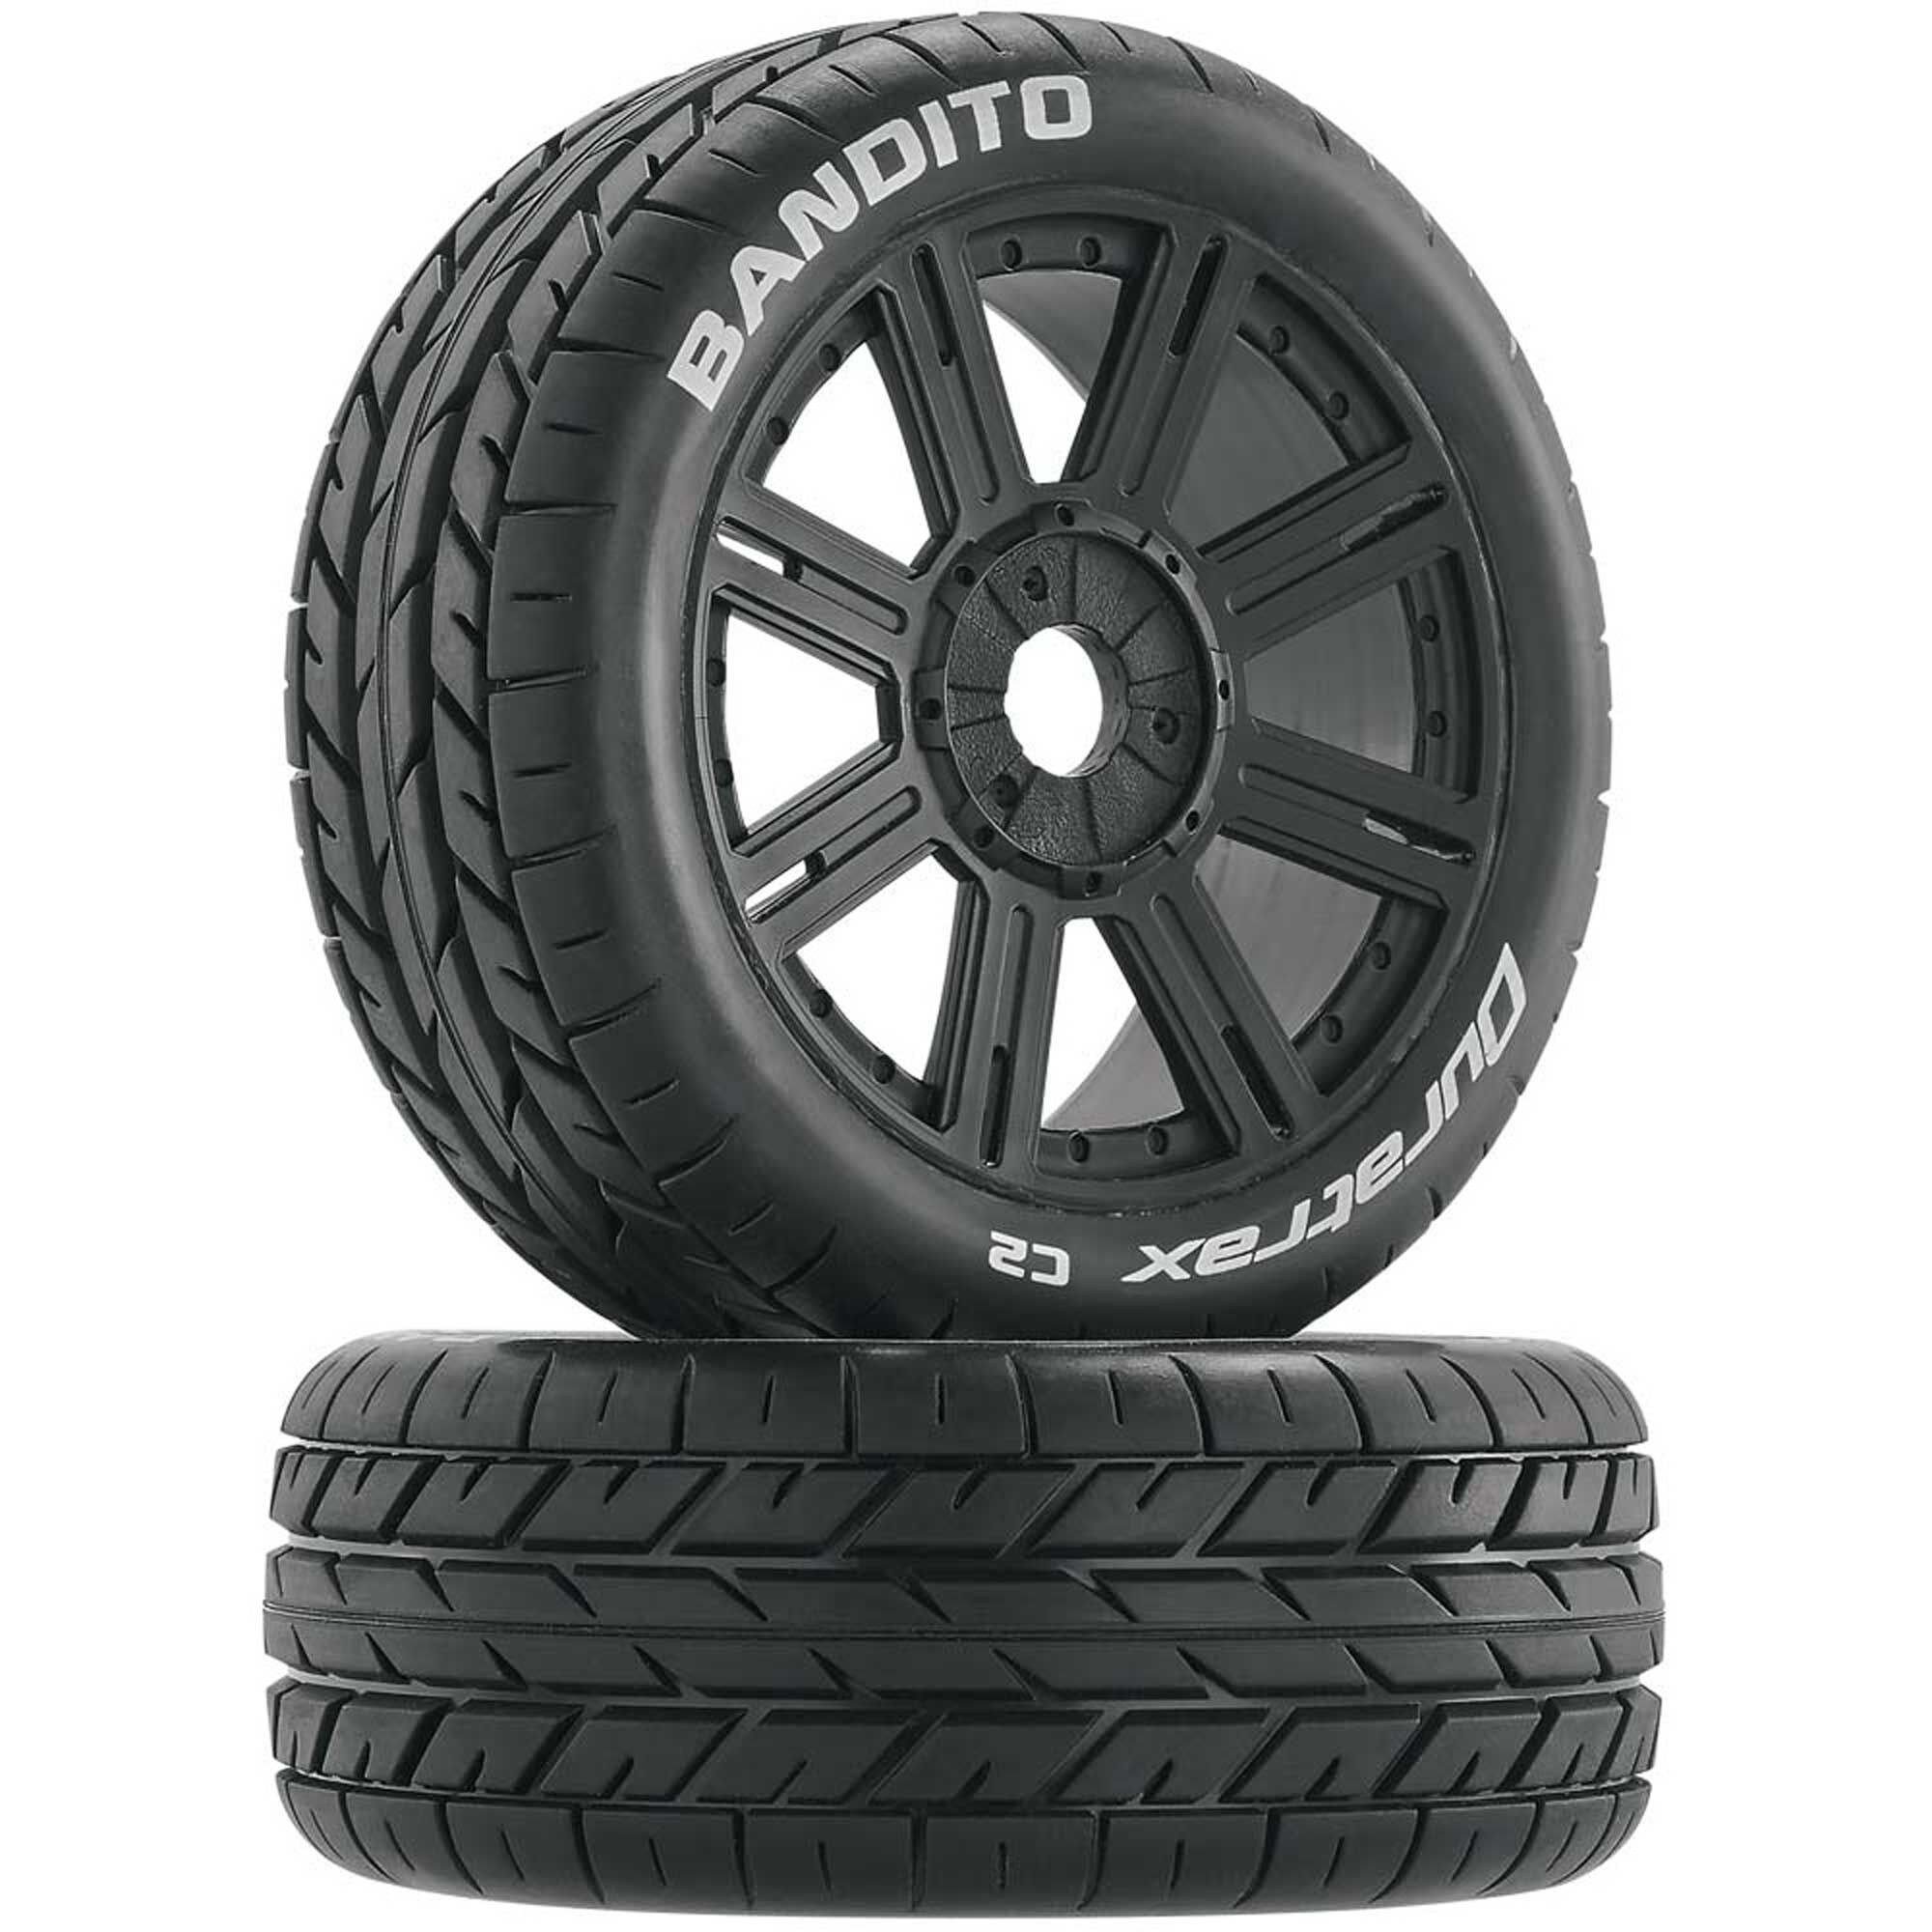 Bandito 1/8 Buggy Tire C2 Mounted Spoke Tires, Black (2)